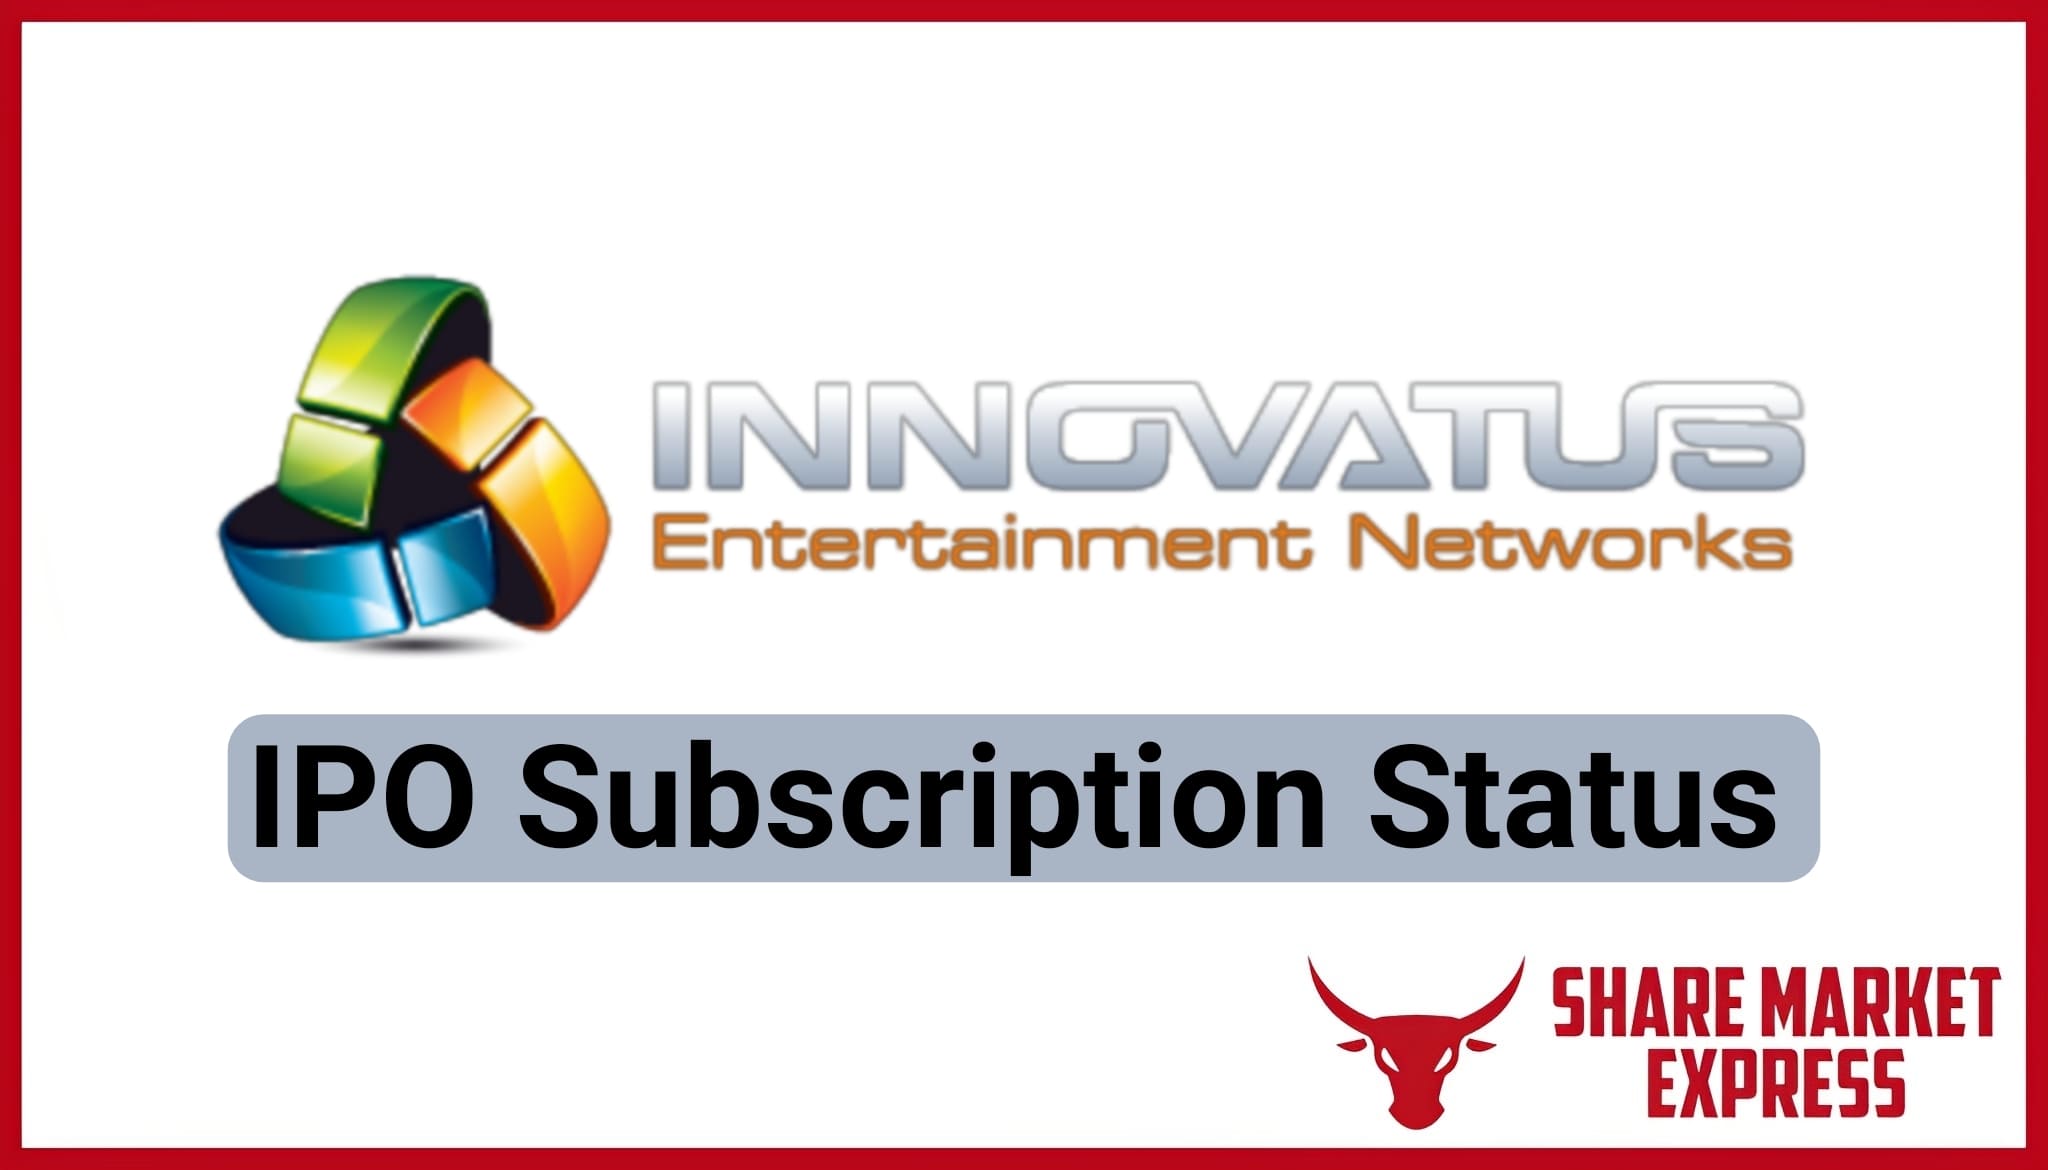 Innovatus Entertainment Networks IPO Subscription Status